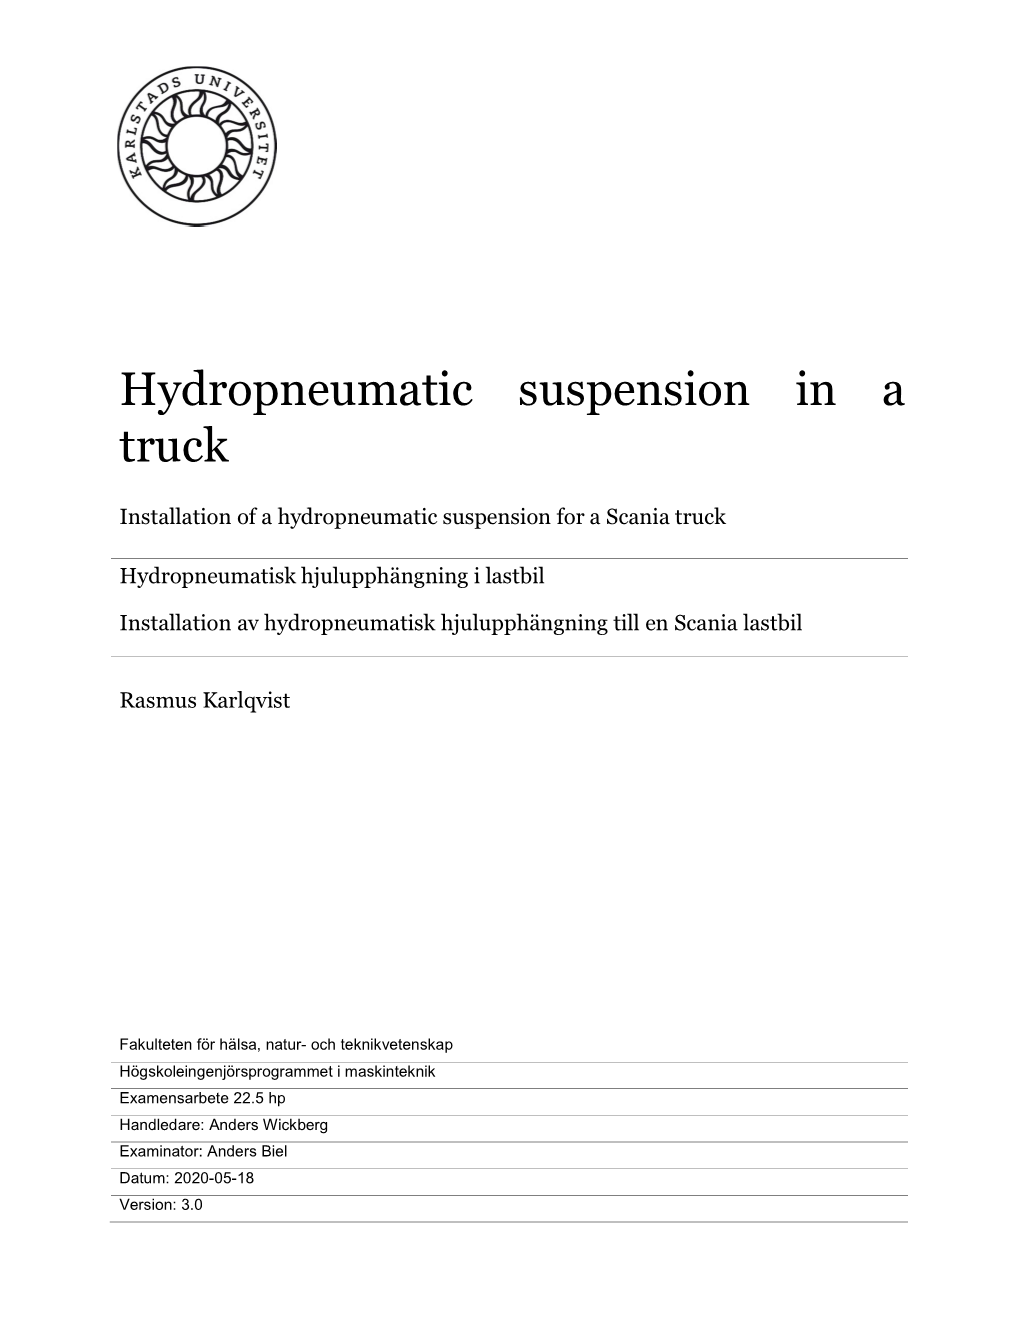 Hydropneumatic Suspension in a Truck